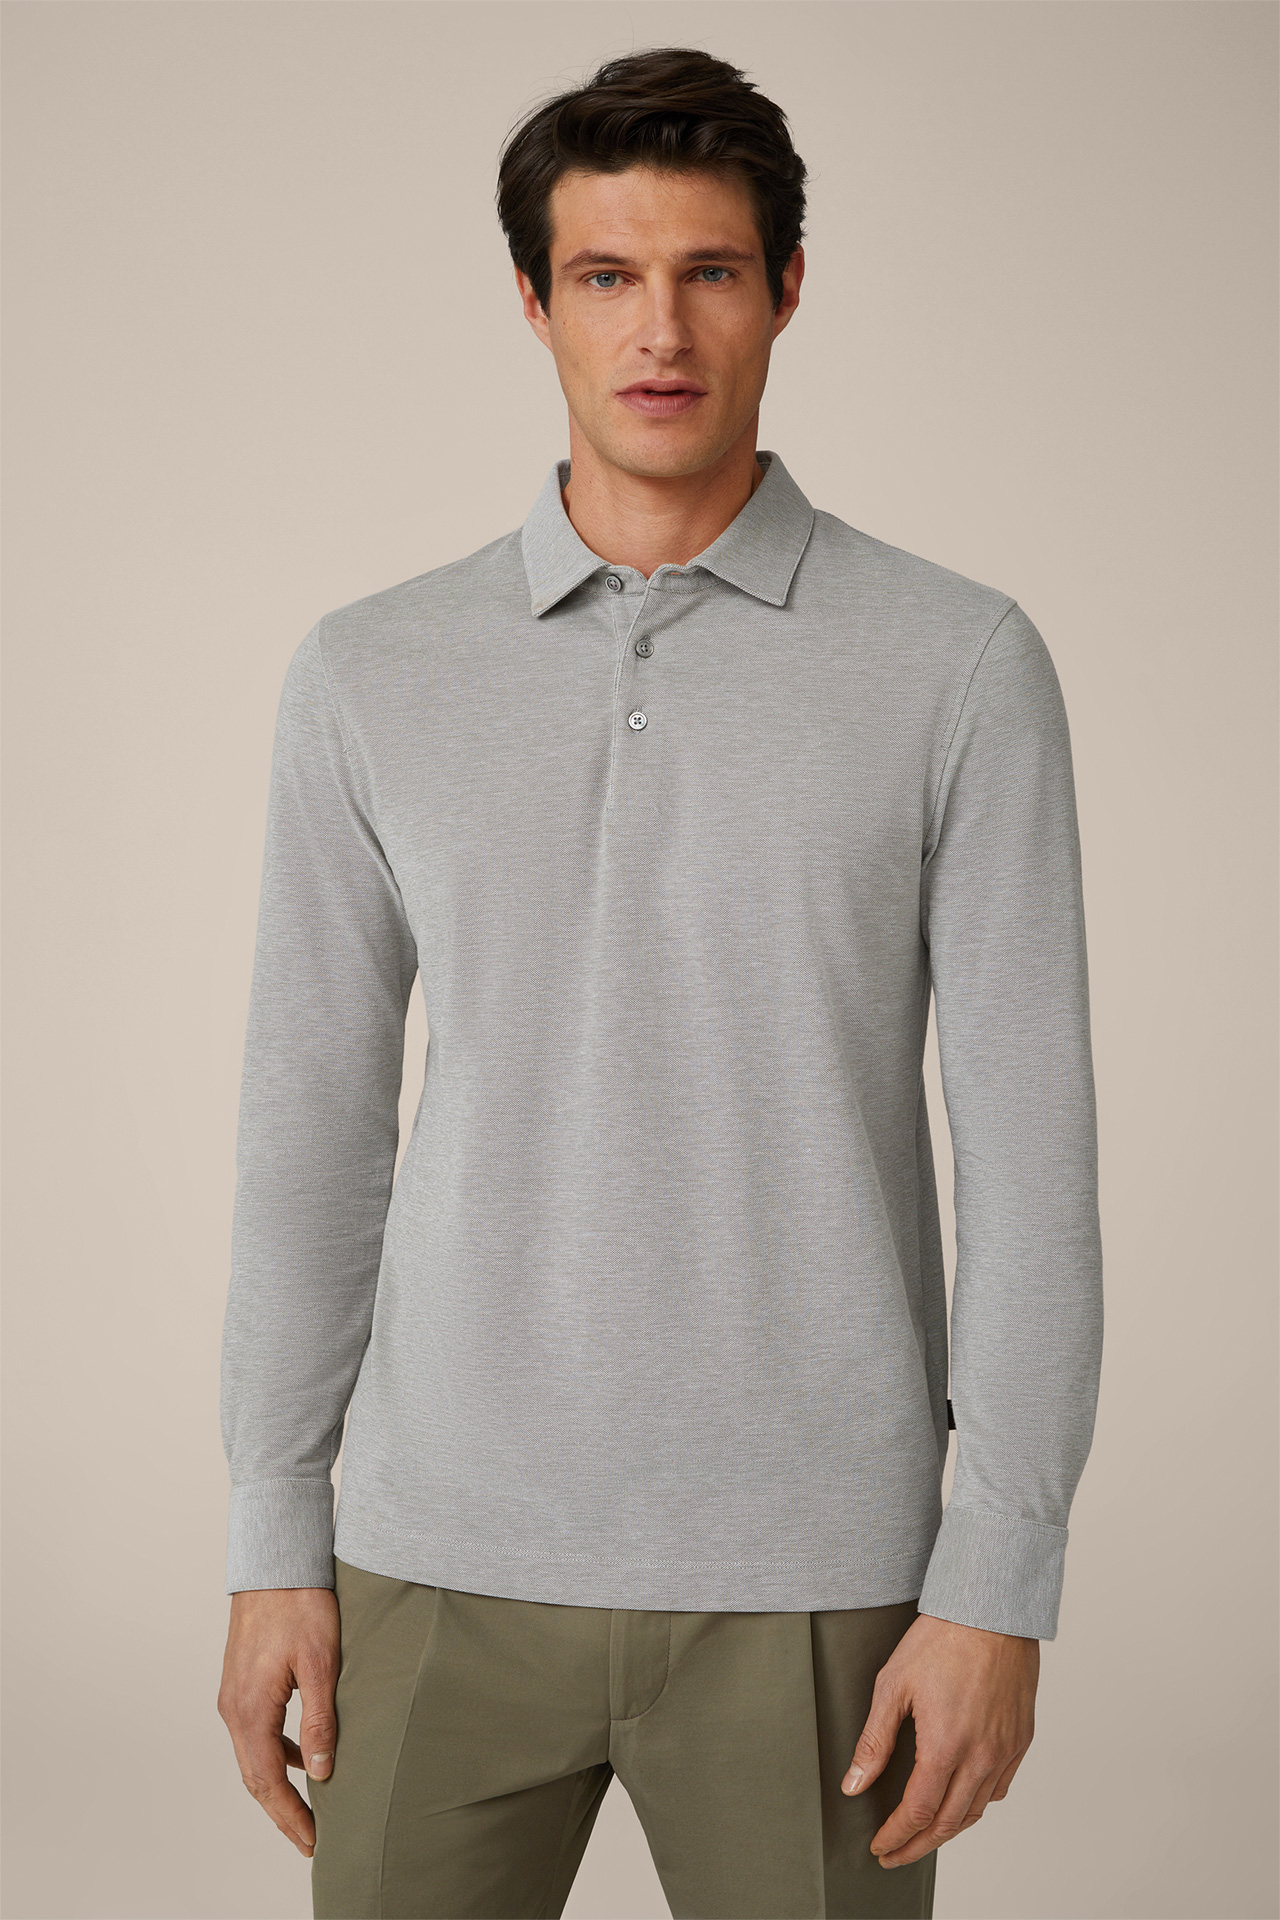 Patrizio Cotton Long-Sleeved Shirt in Grey Melange